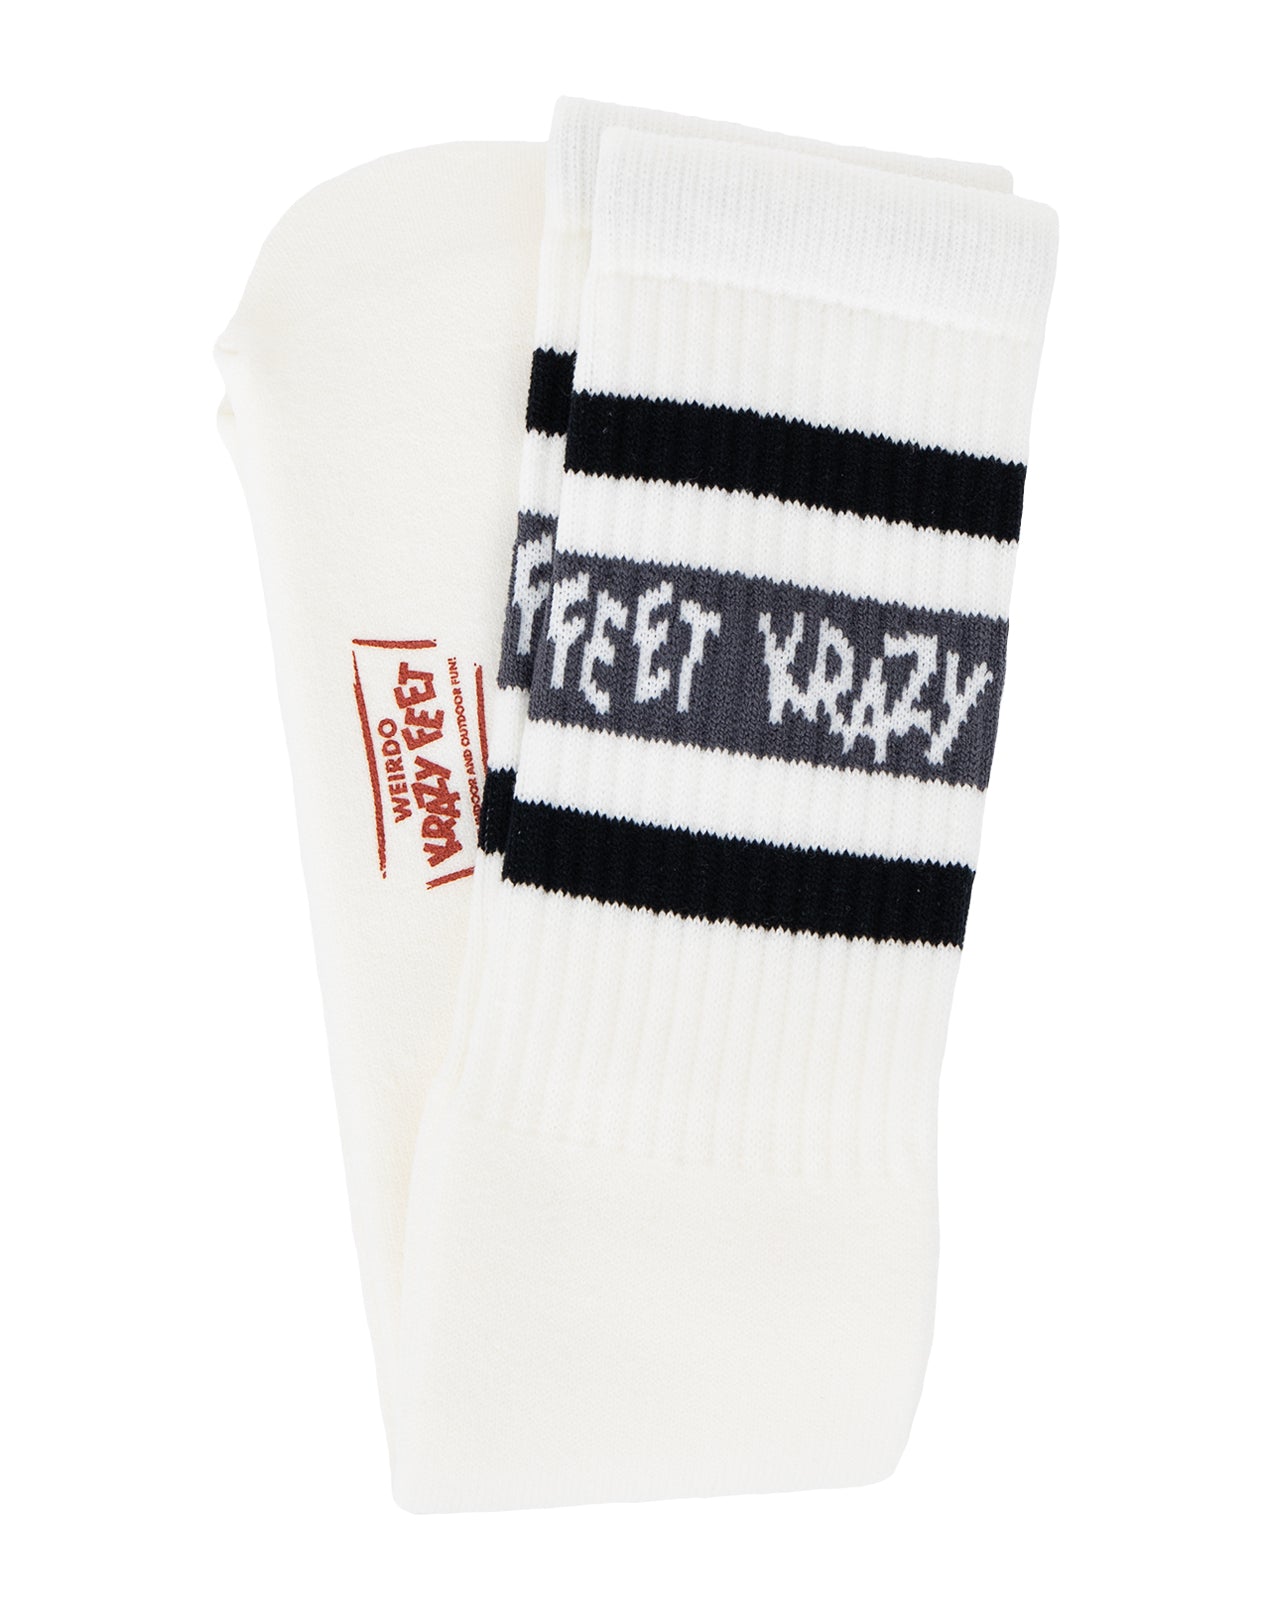 Weirdo Krazy Feet Tube Socks, Grey